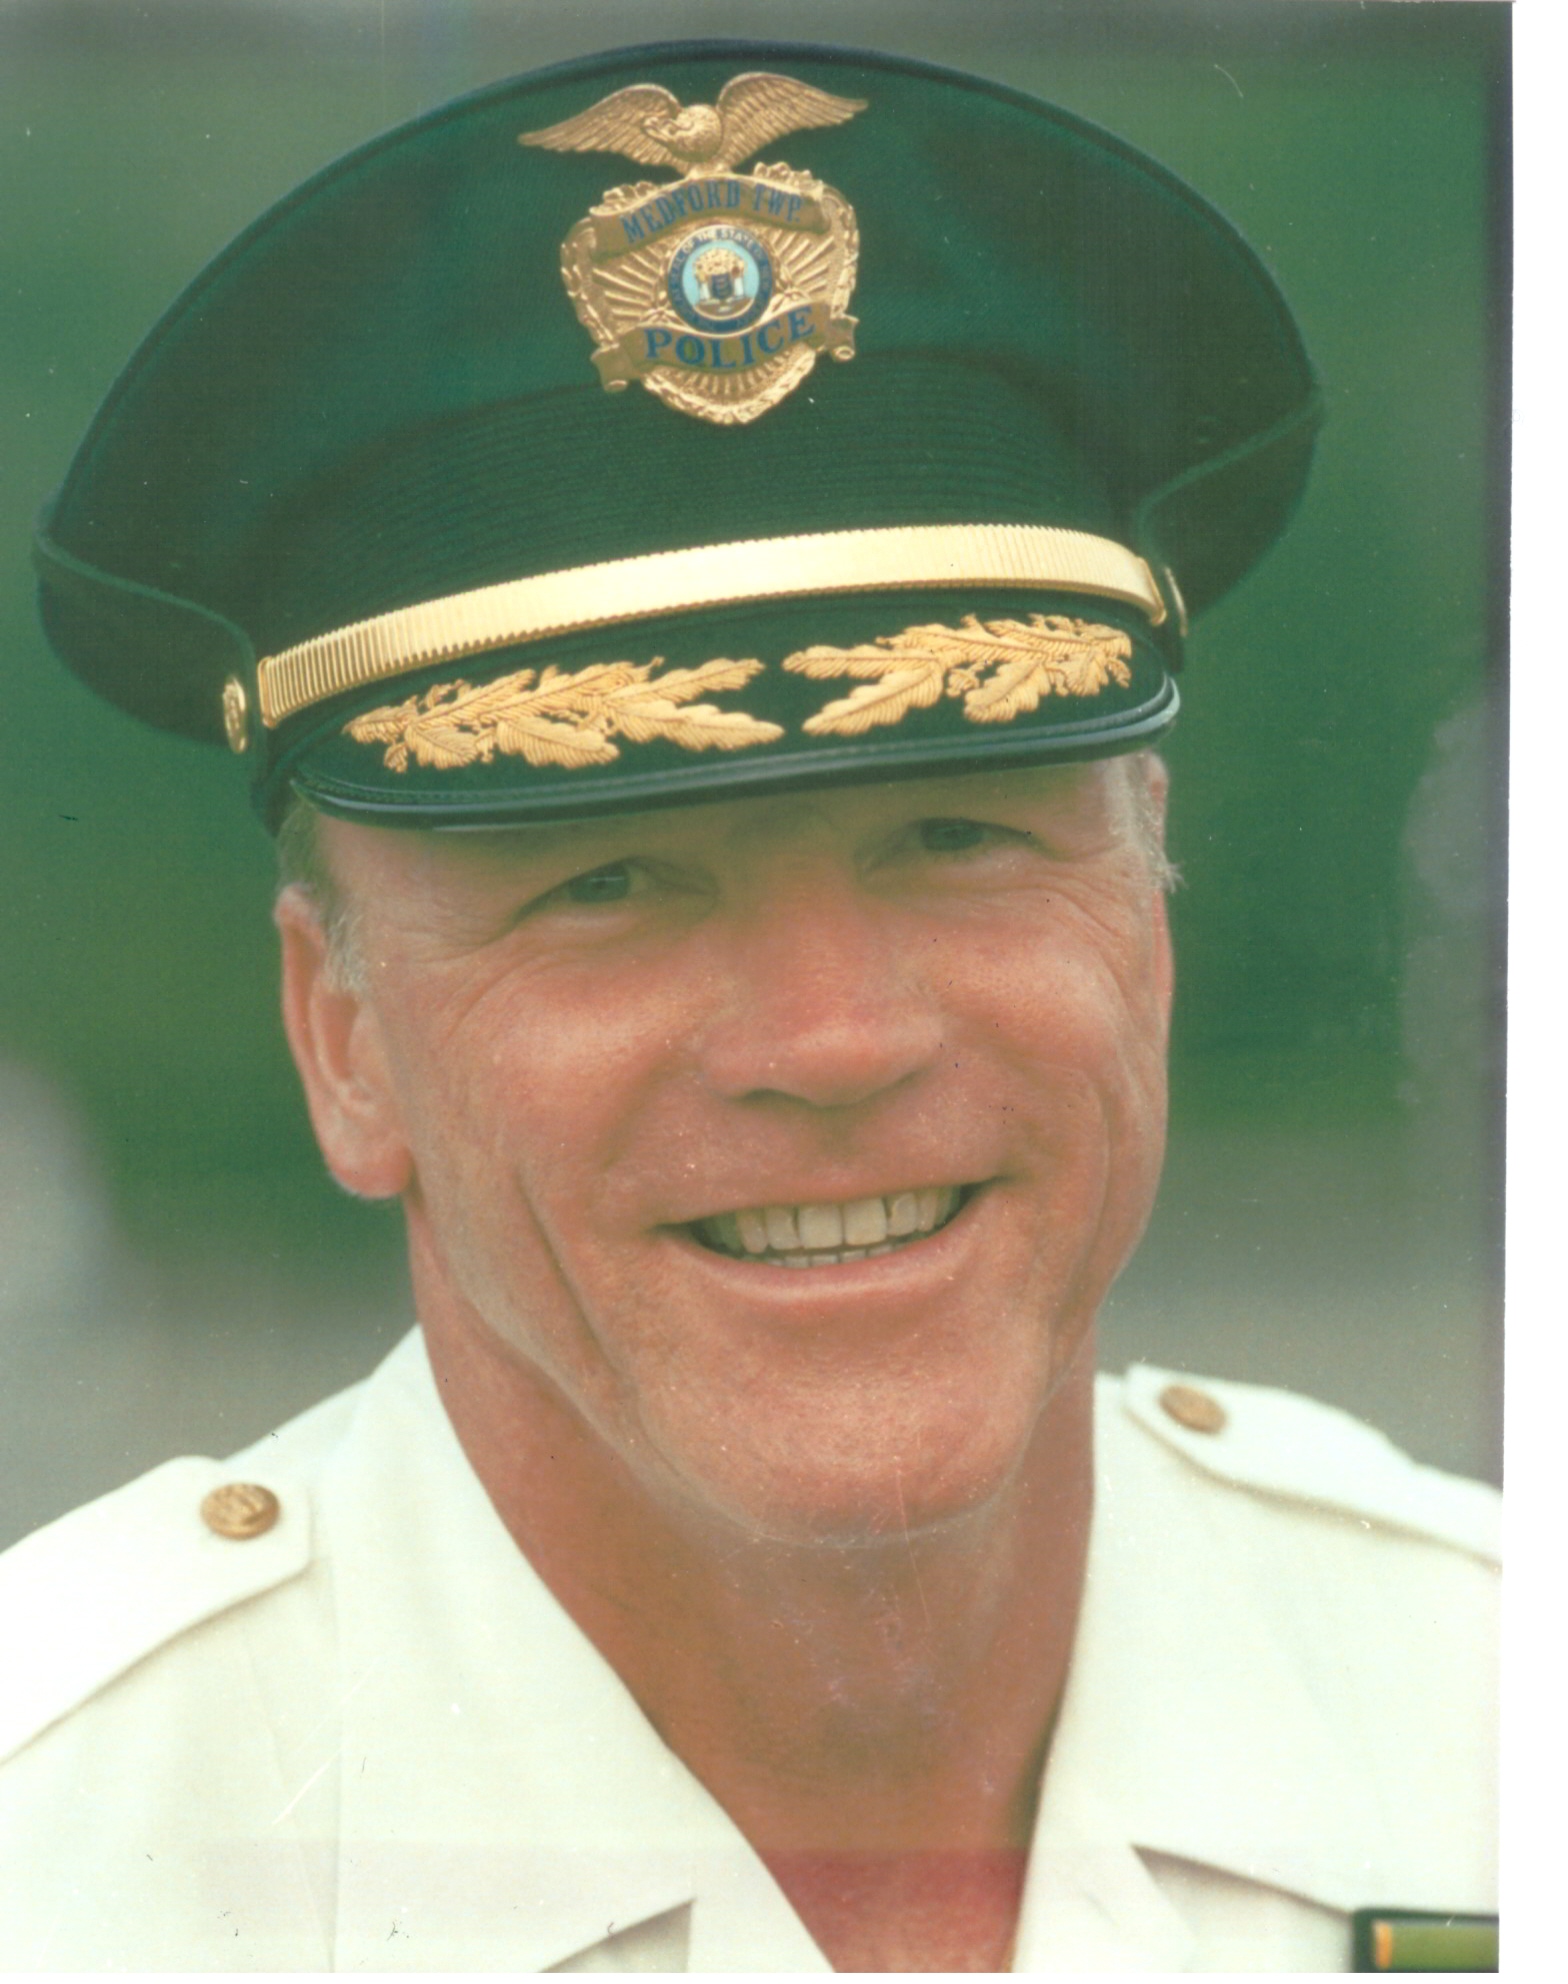 Chief Steve McGarvey #2510